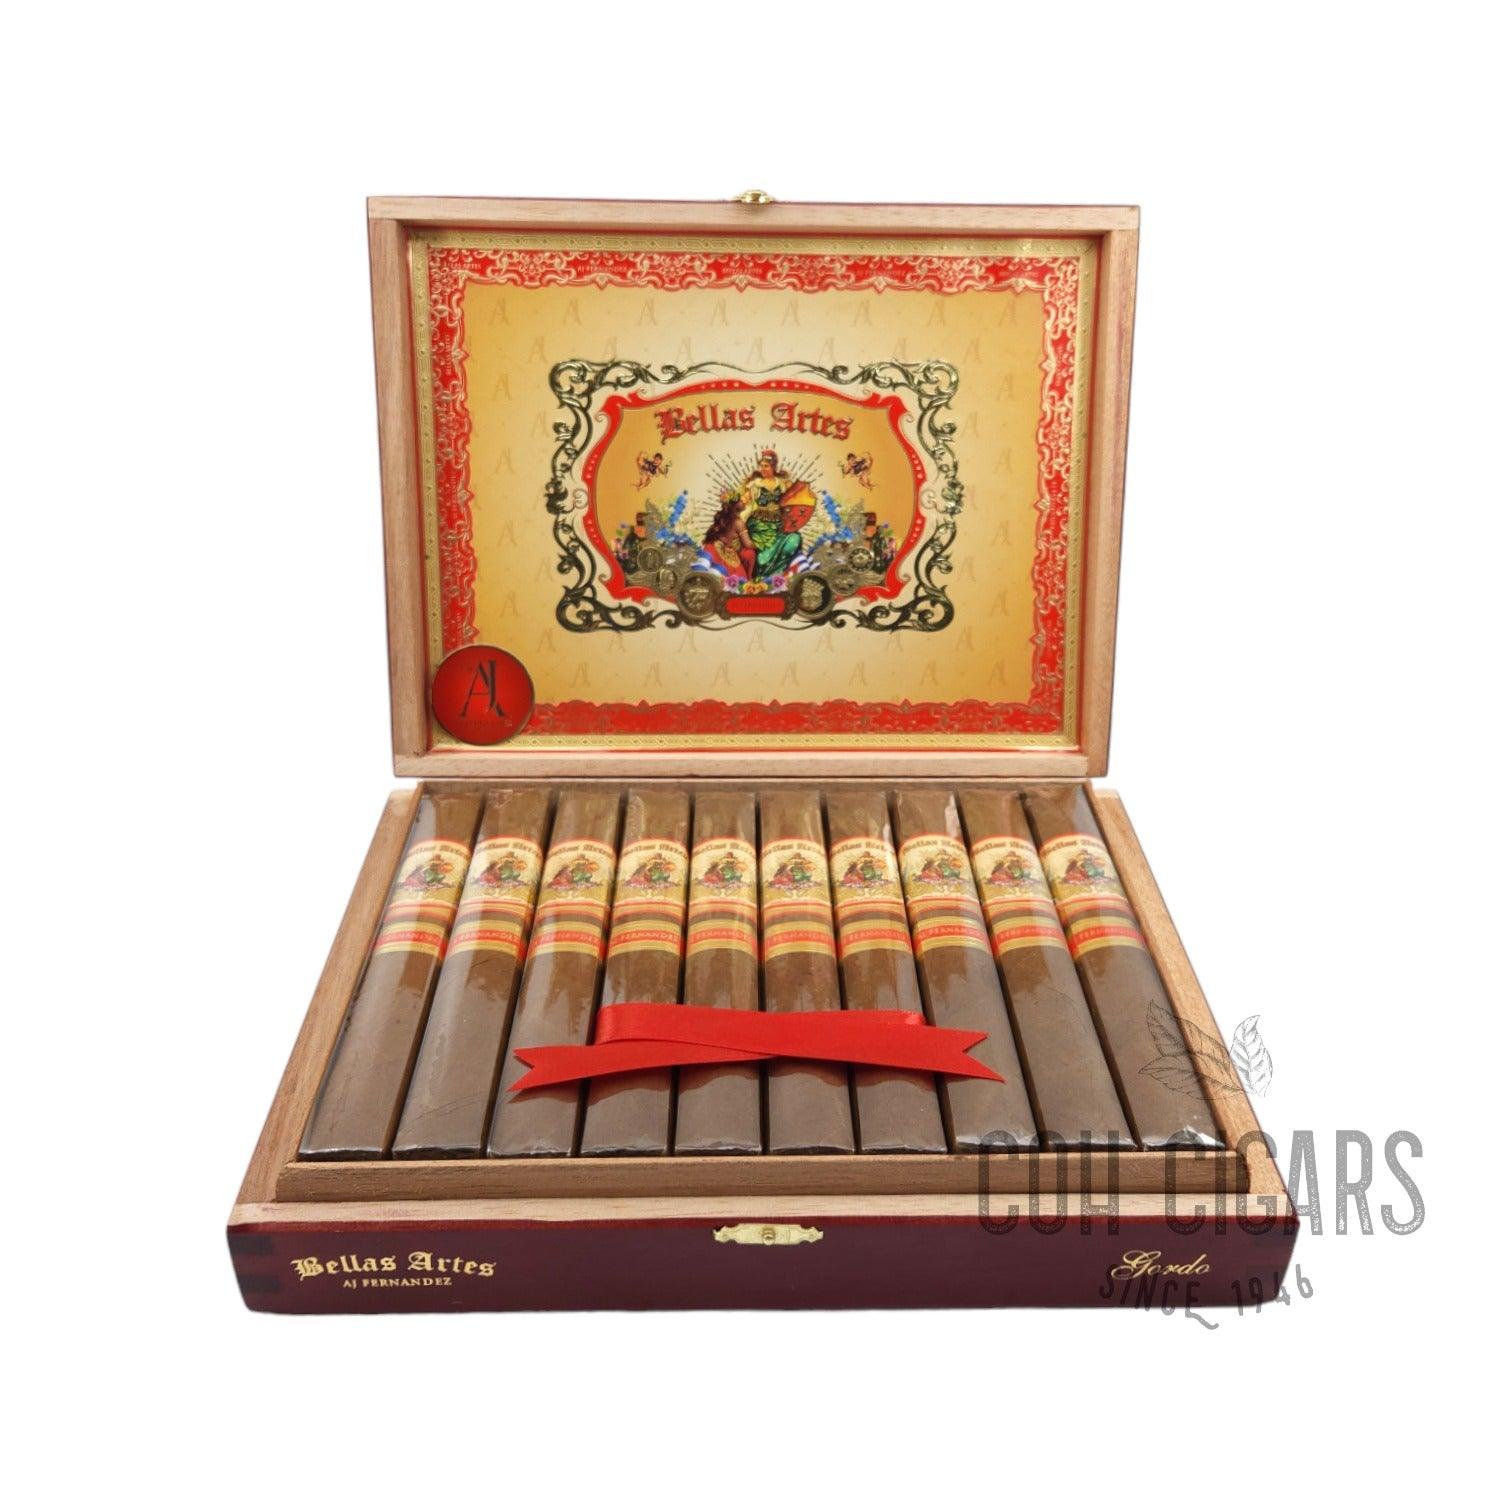 AJ Fernandez Cigar | Bellas Artes Gordo | Box 20 - hk.cohcigars